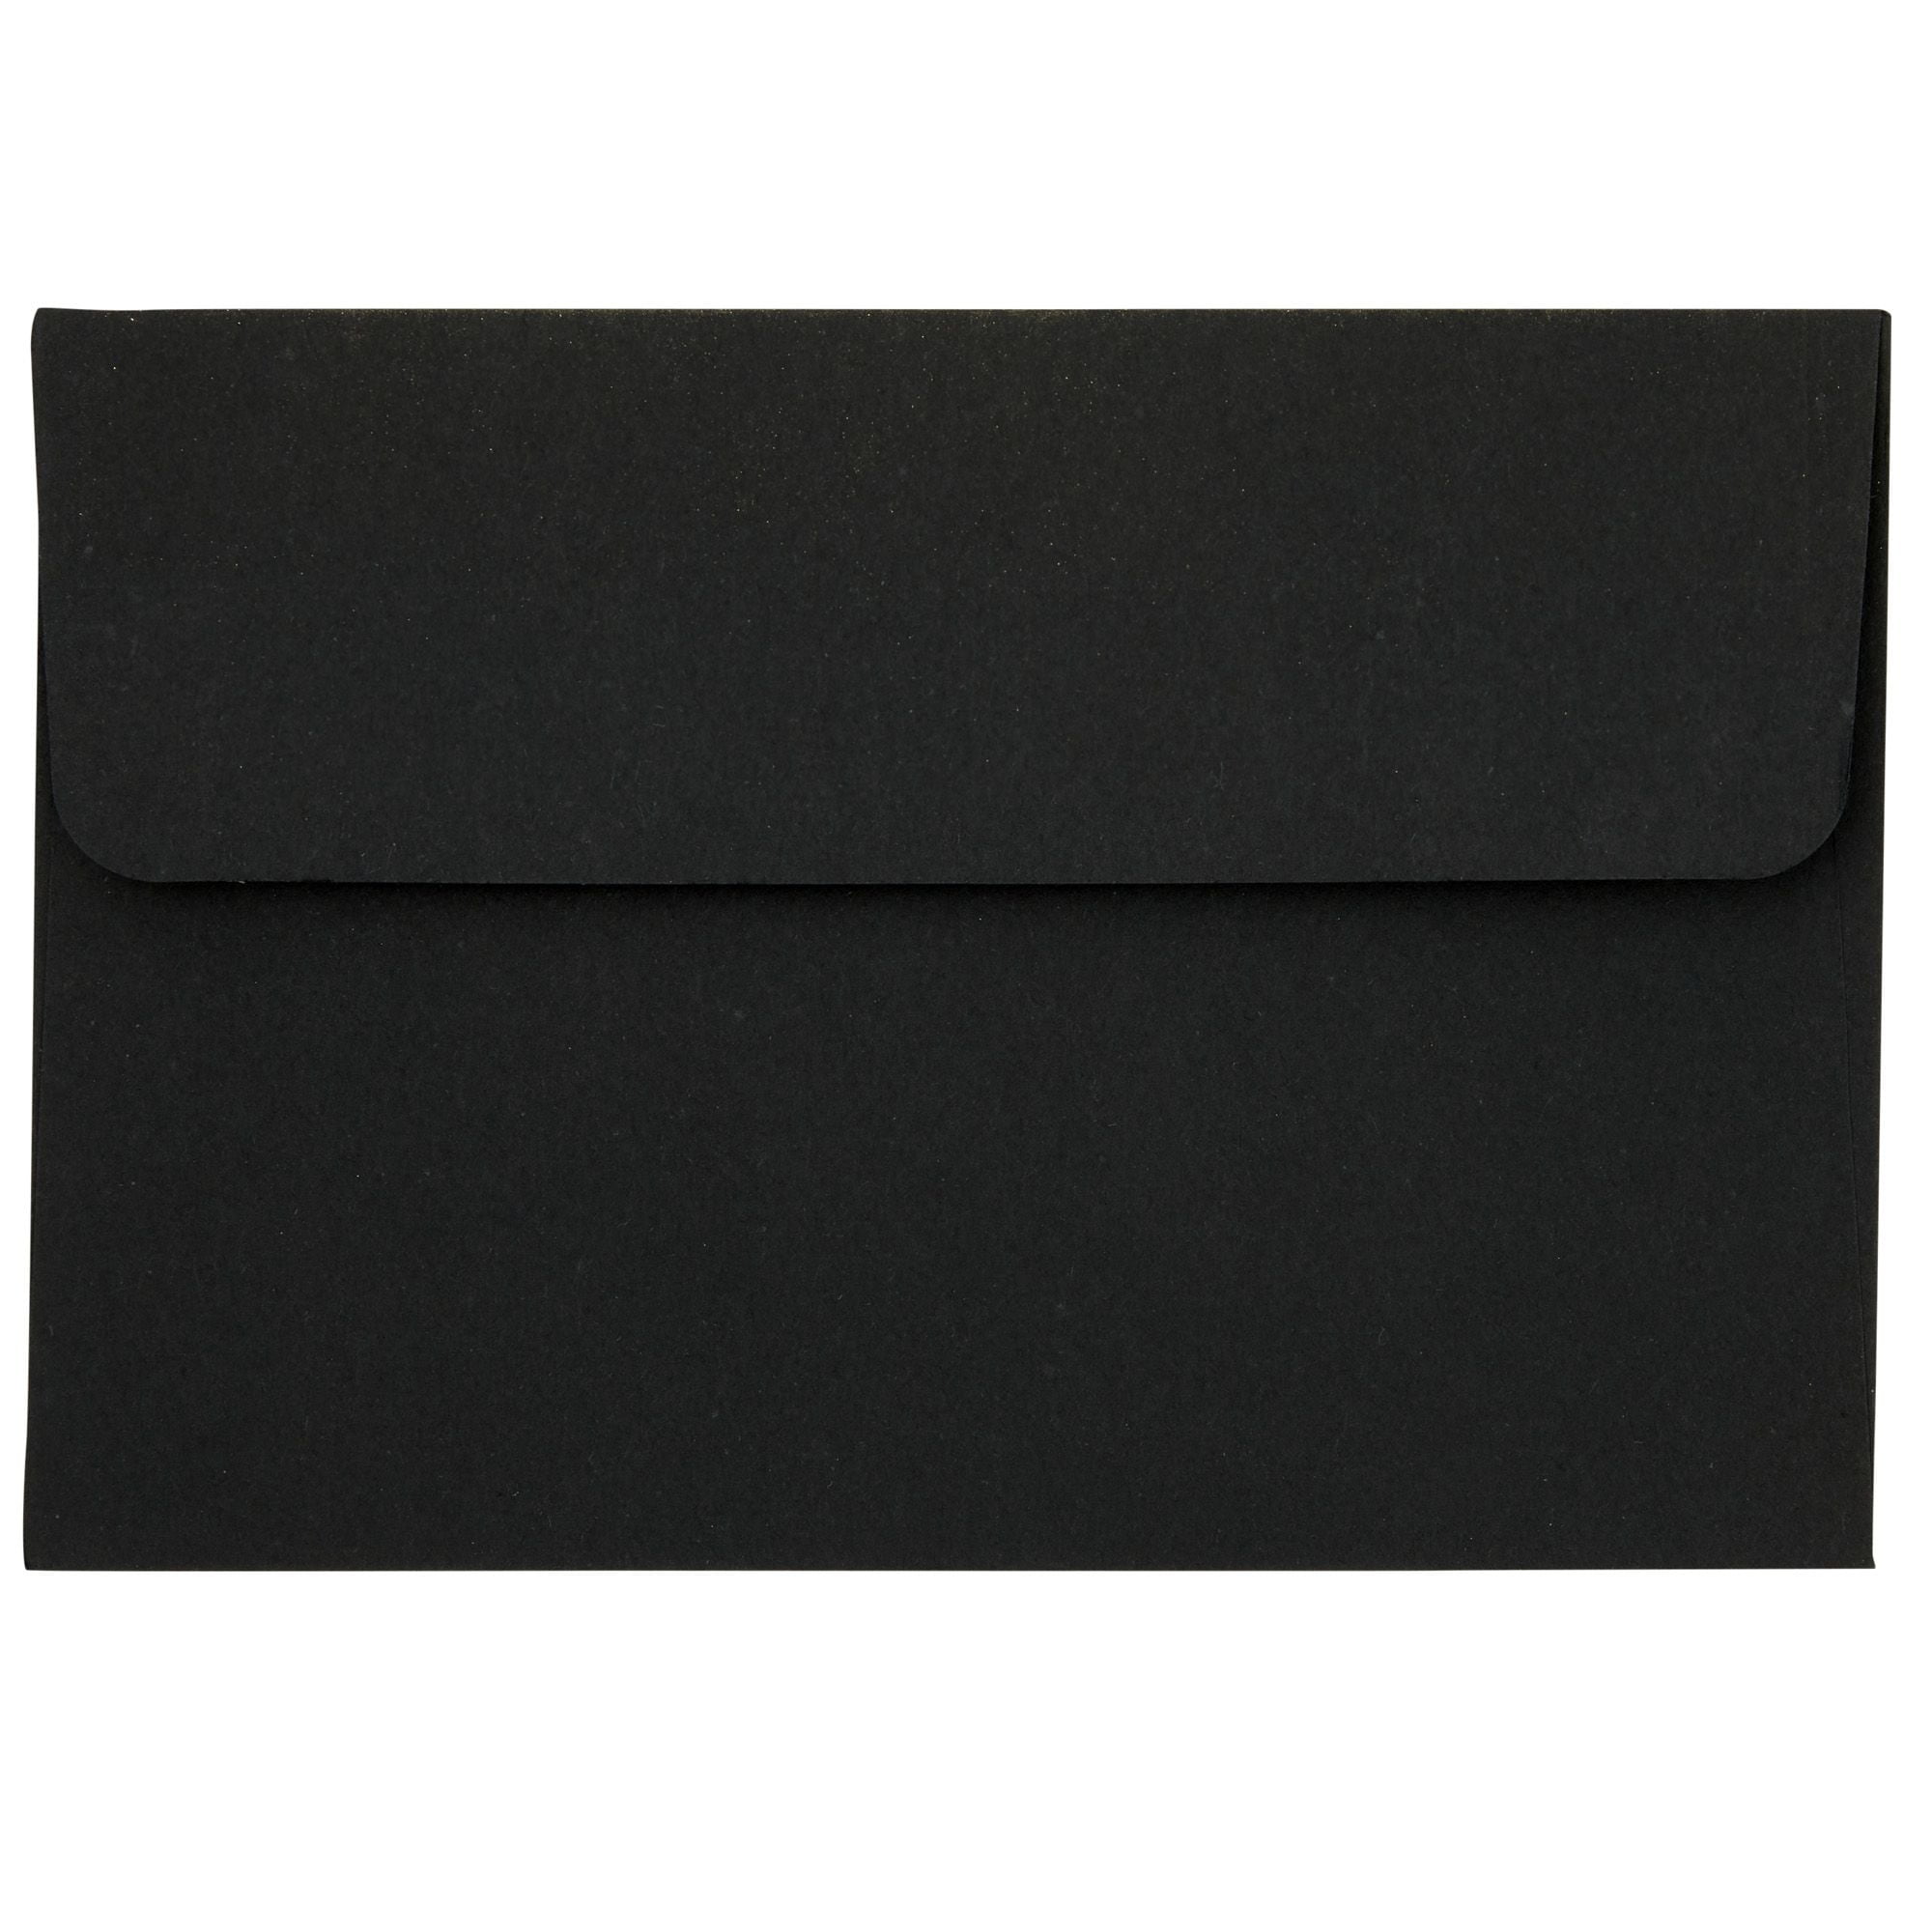 Colorplan Ebony Black #10 Square Flap 91# Text Envelopes Pack of 50